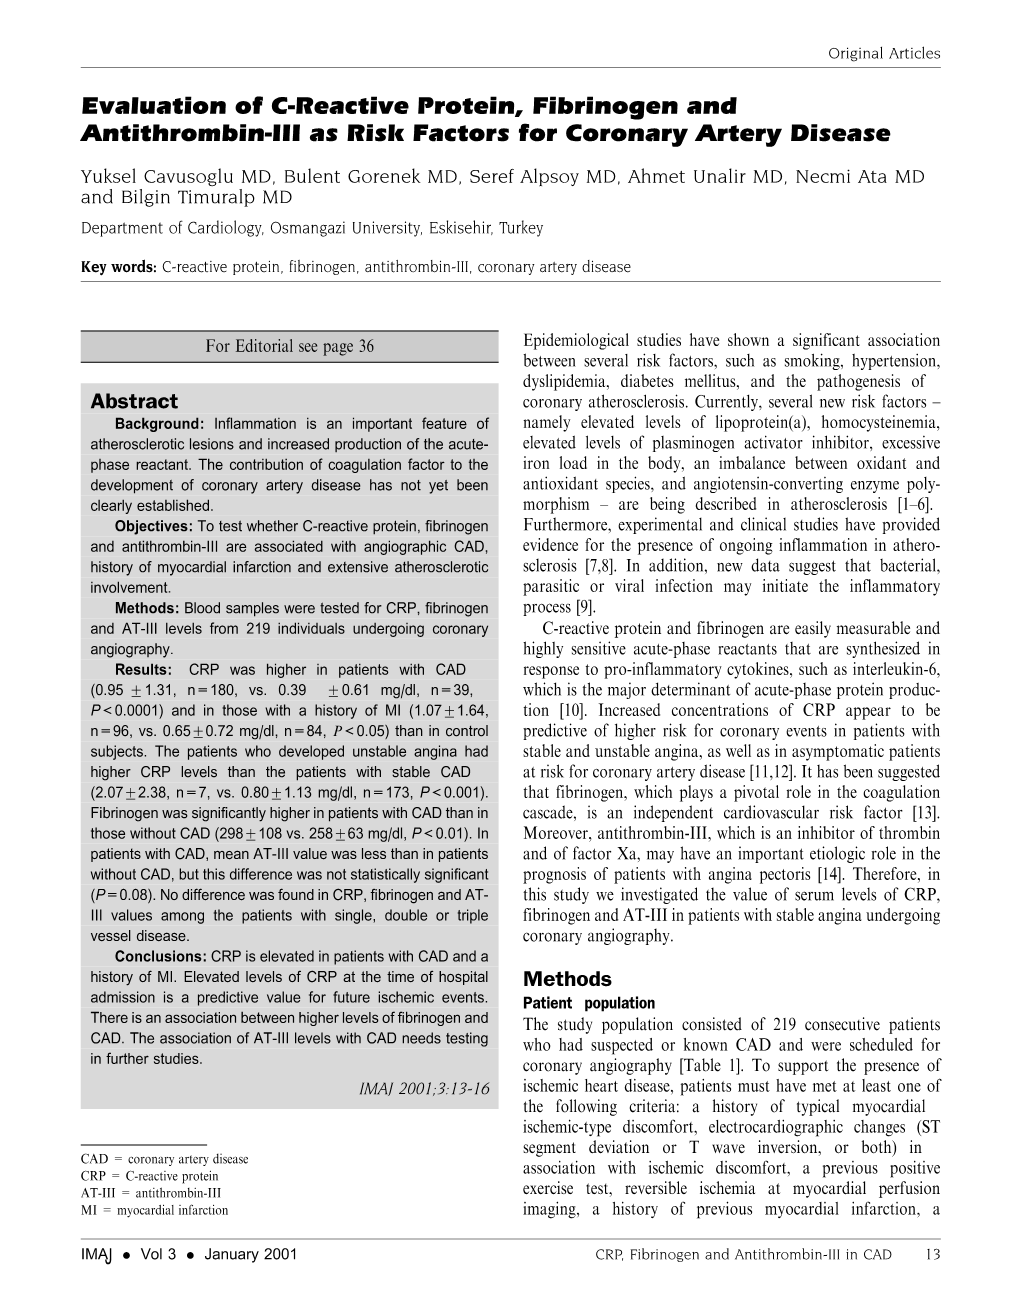 Evaluation of C-Reactive Protein, Fibrinogen and Antithrombin-III As